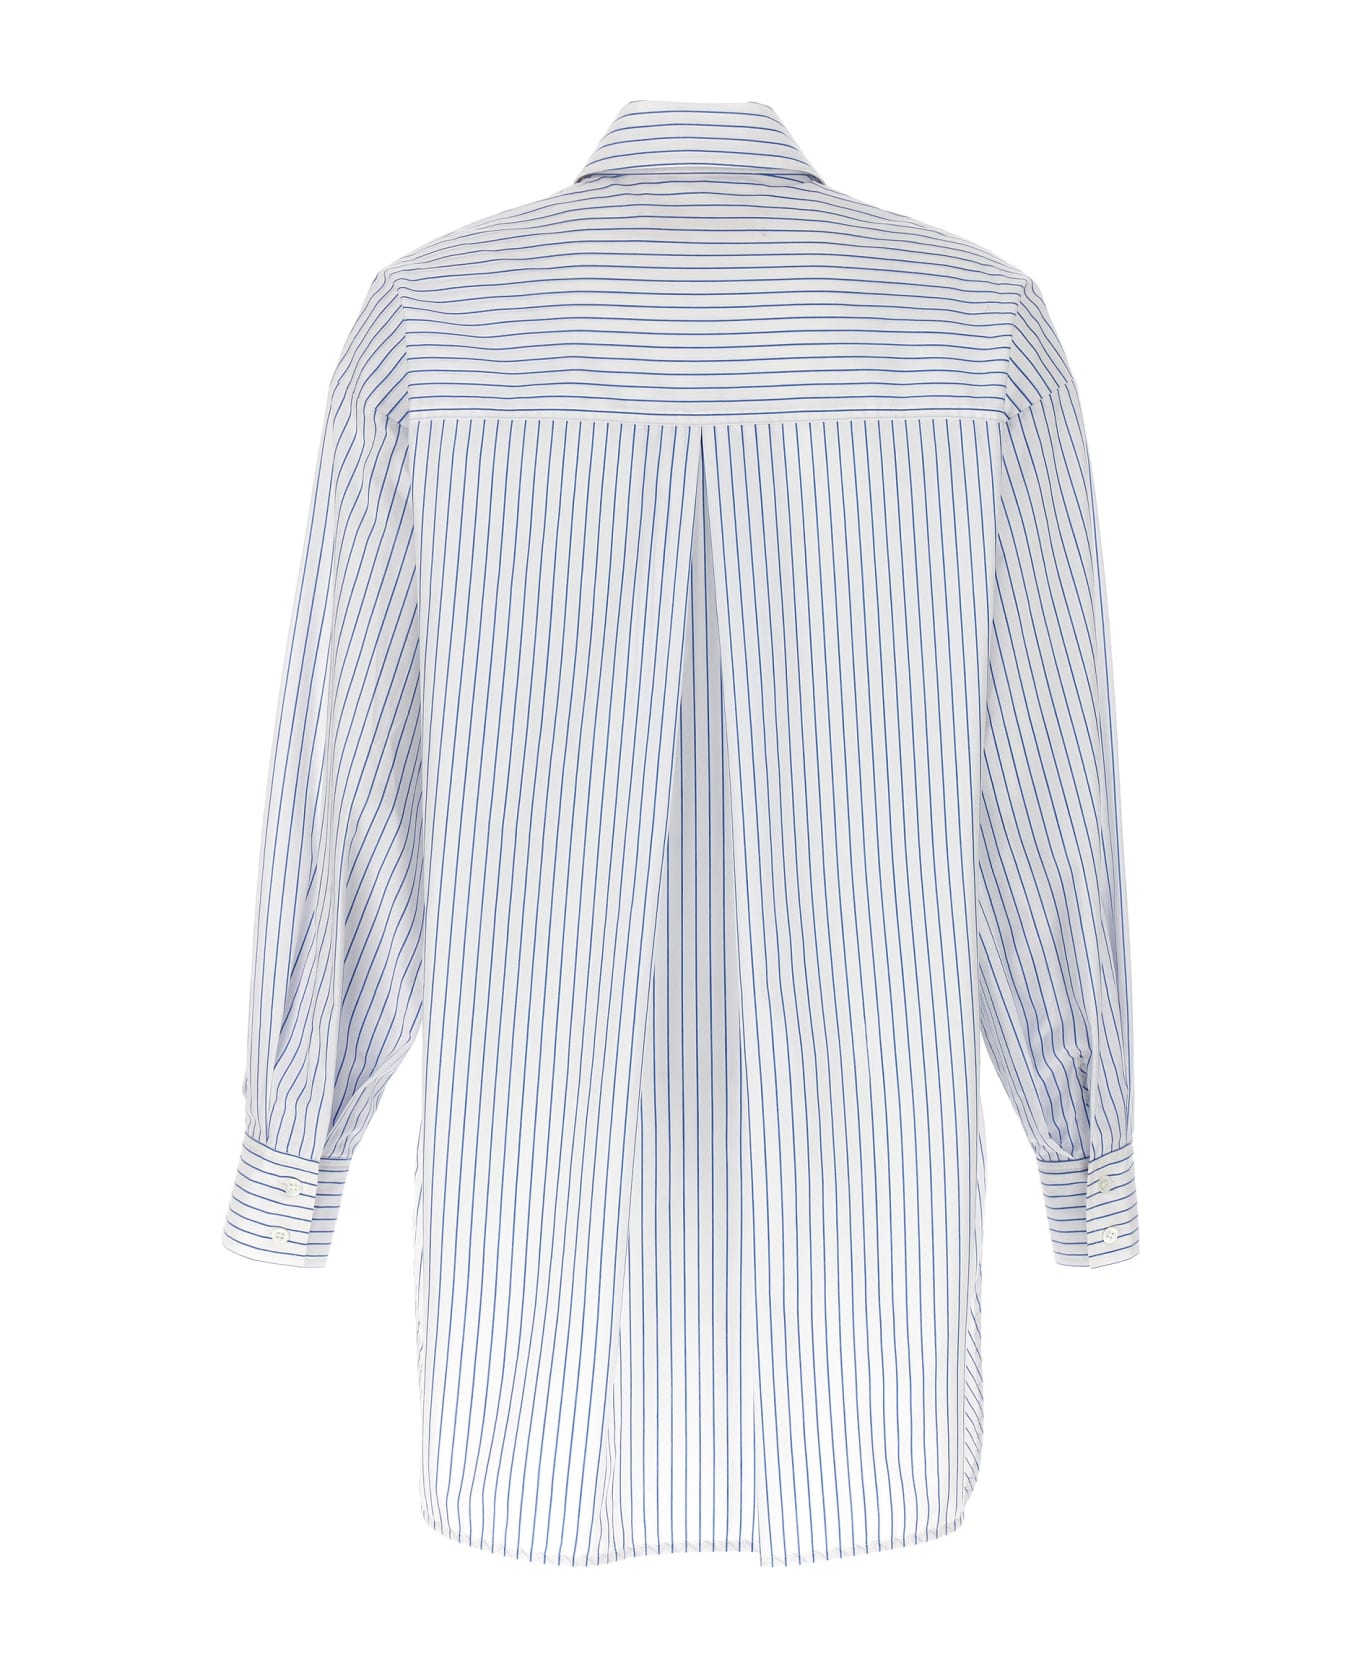 Carolina Herrera Striped Shirt - Light Blue シャツ